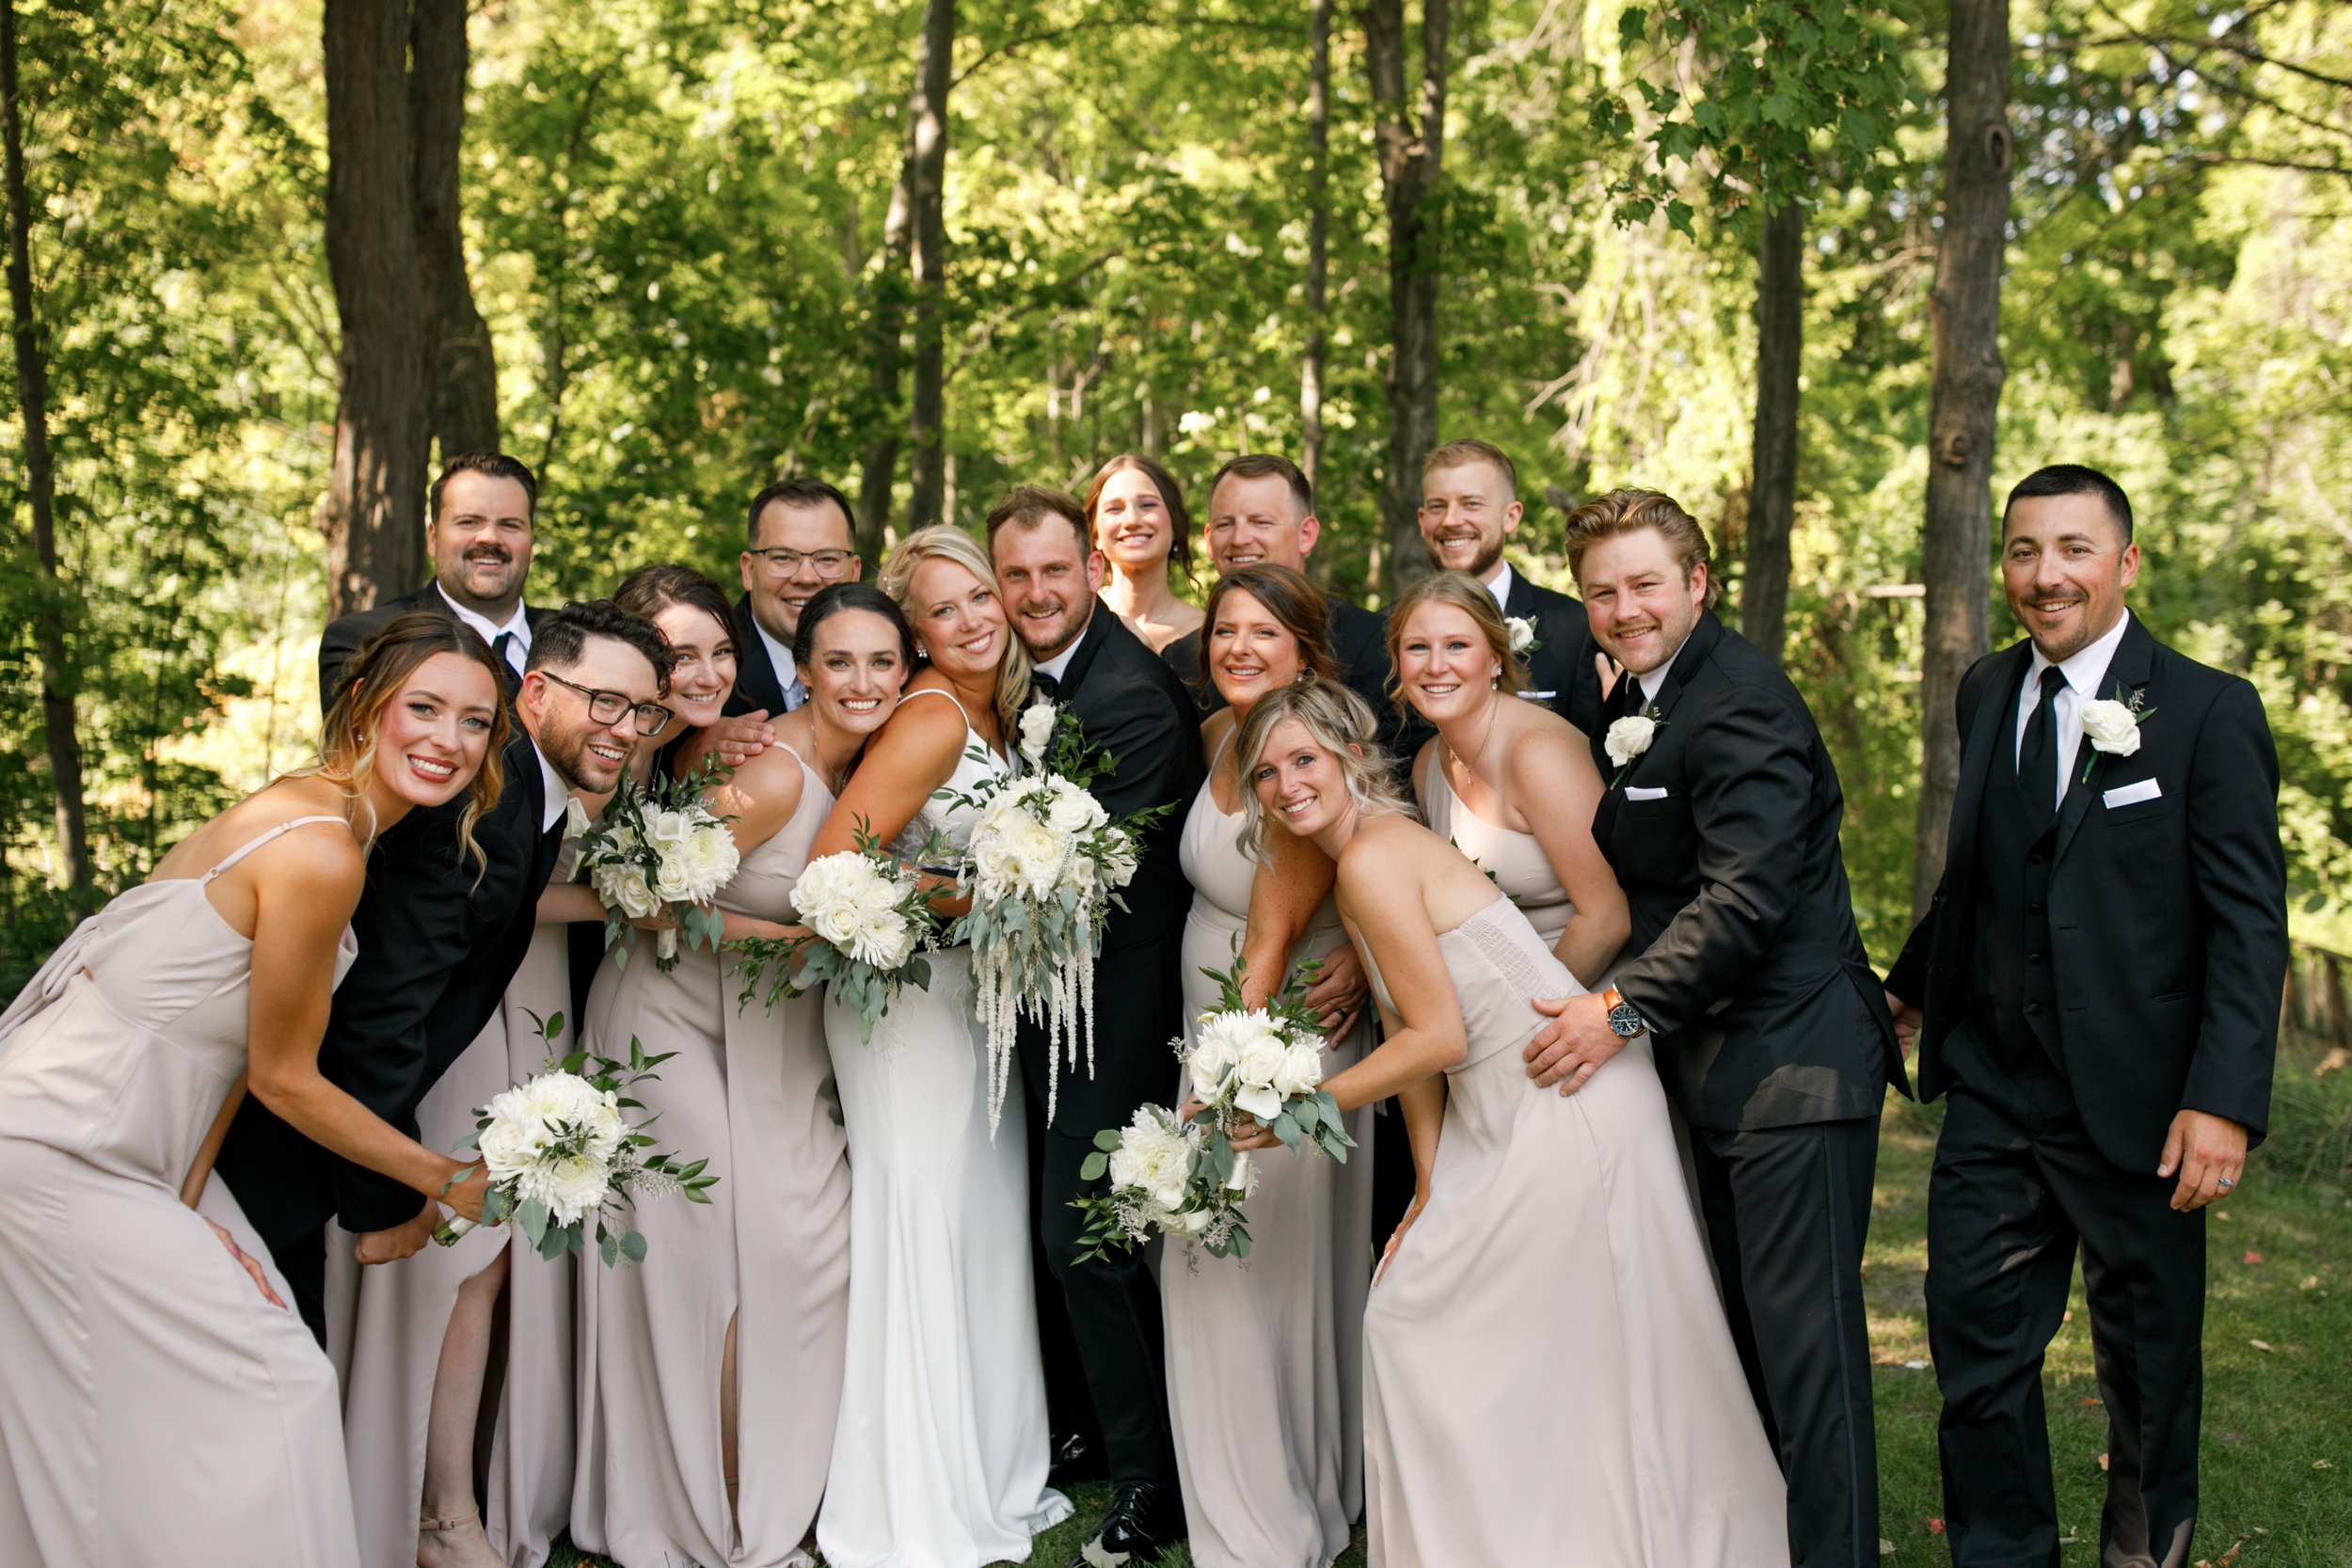 Josh and Erica Wedding Preview - Shanty Creek Wedding - Northern Michigan Wedding Photographer - J Darling Photo_098.jpg